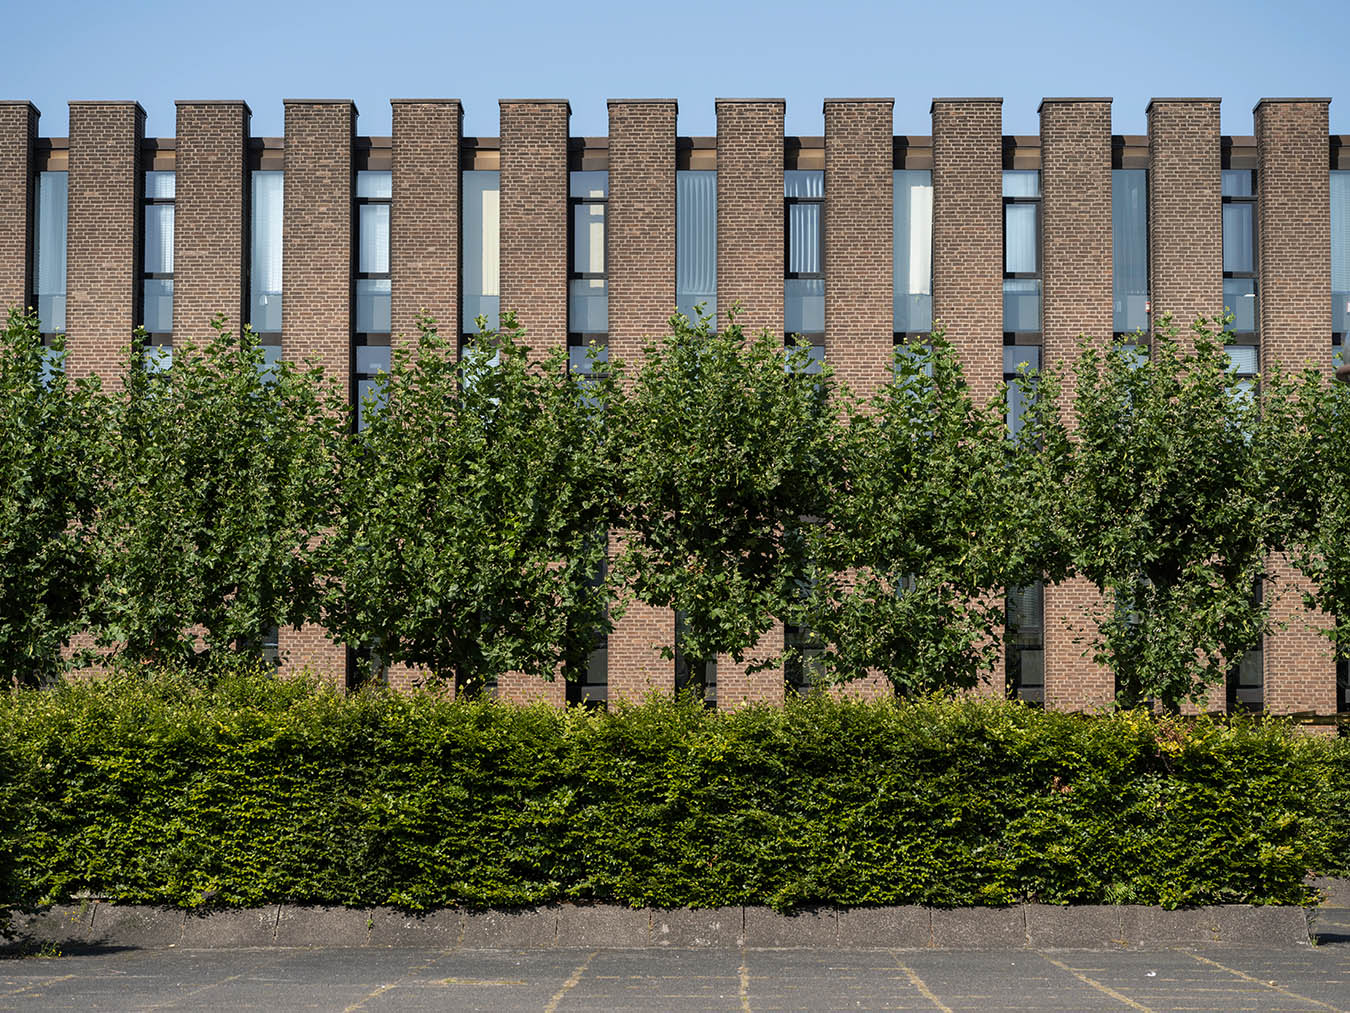 Architeckturfotografie: Rathaus Castrop-Rauxel (Arne Jacobsen)